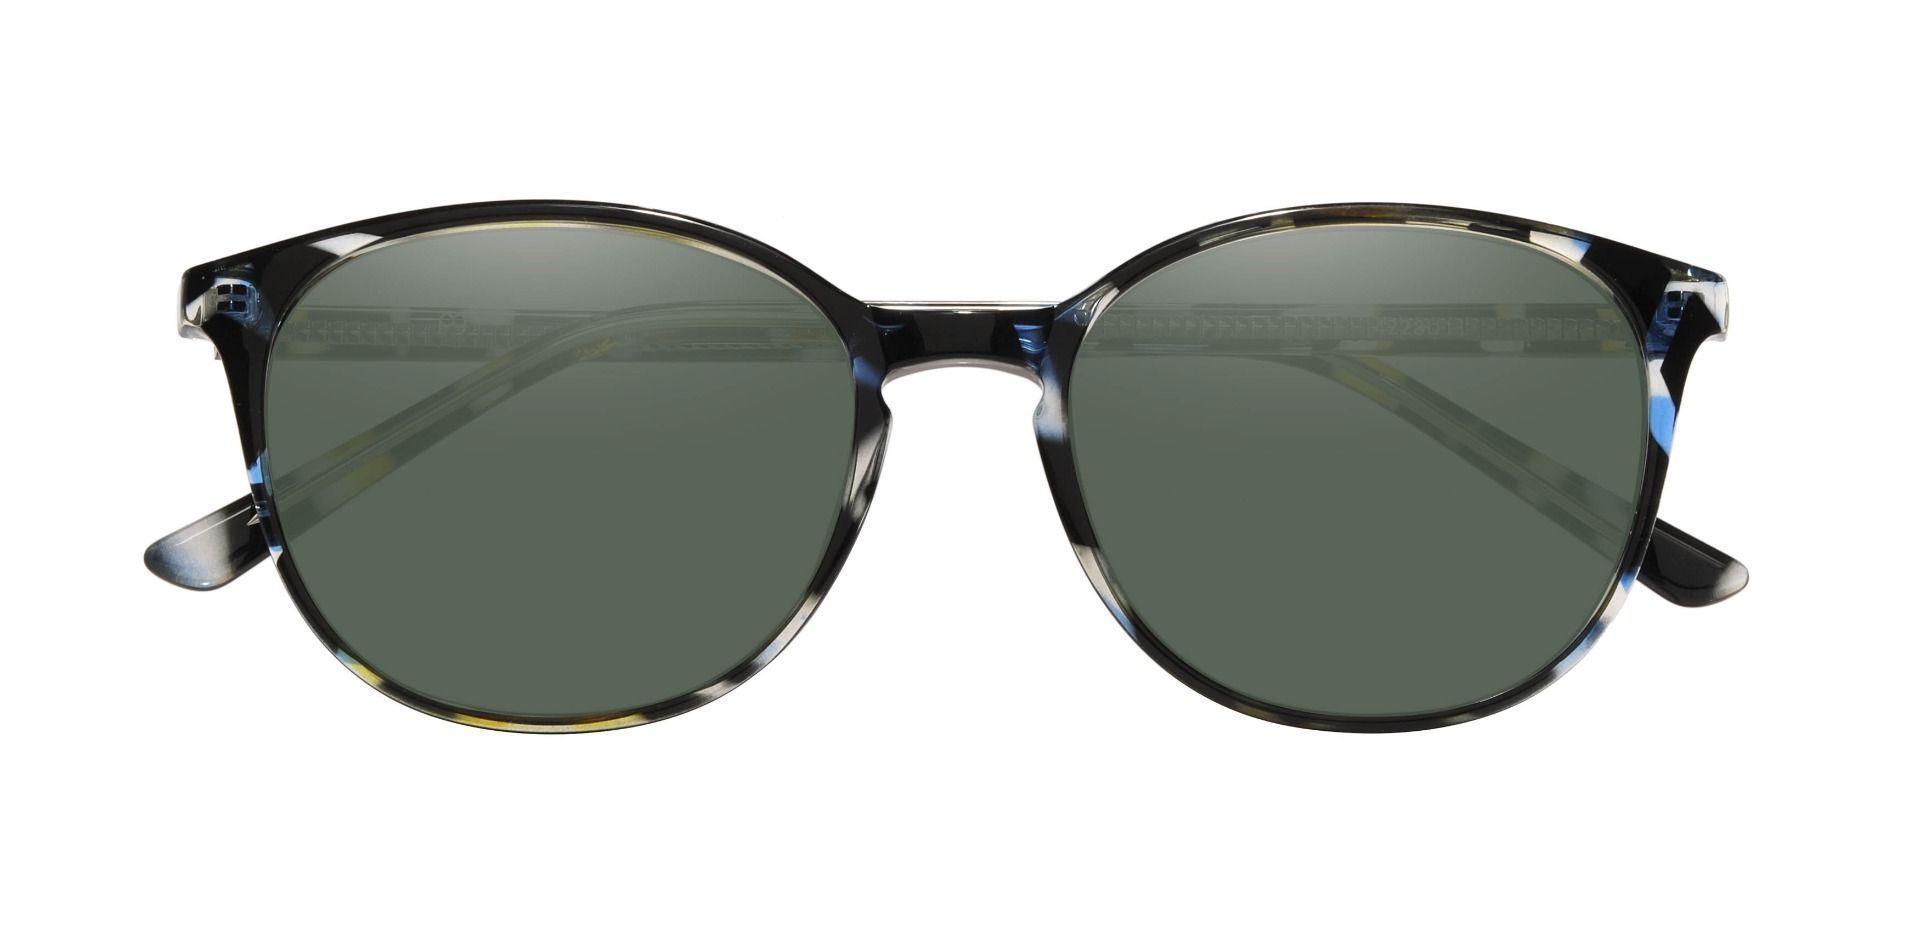 Shanley Oval Progressive Sunglasses - Multi Color Frame With Green Lenses